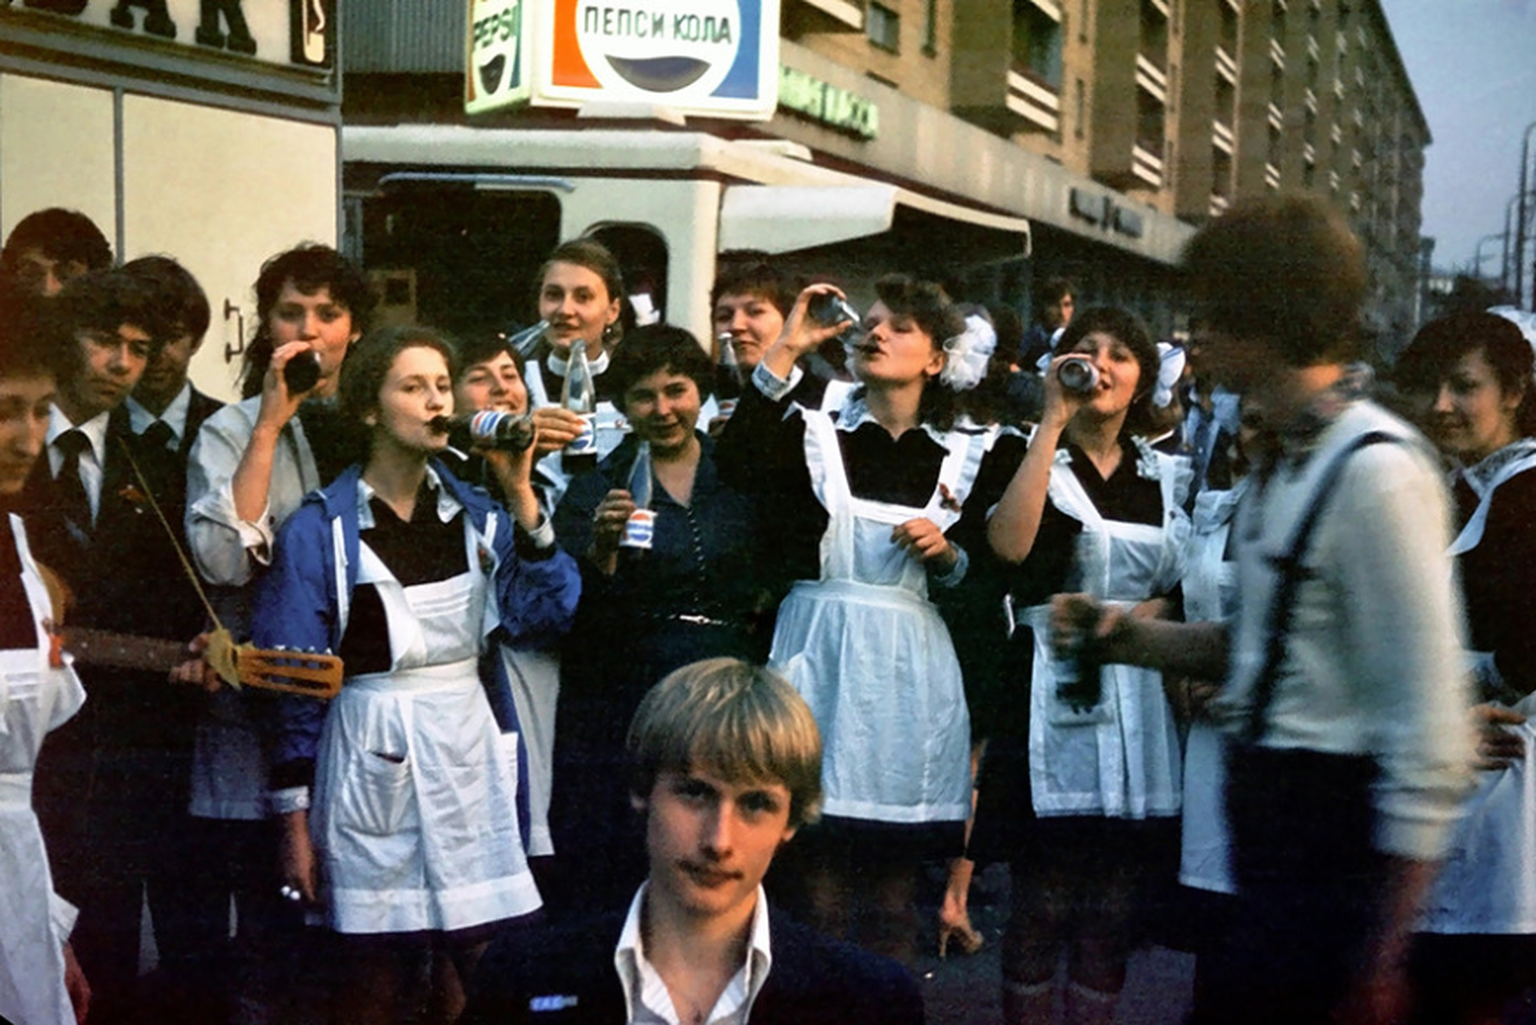 Pepsi-Promotion, Moskau 1981
https://russiainphoto.ru/